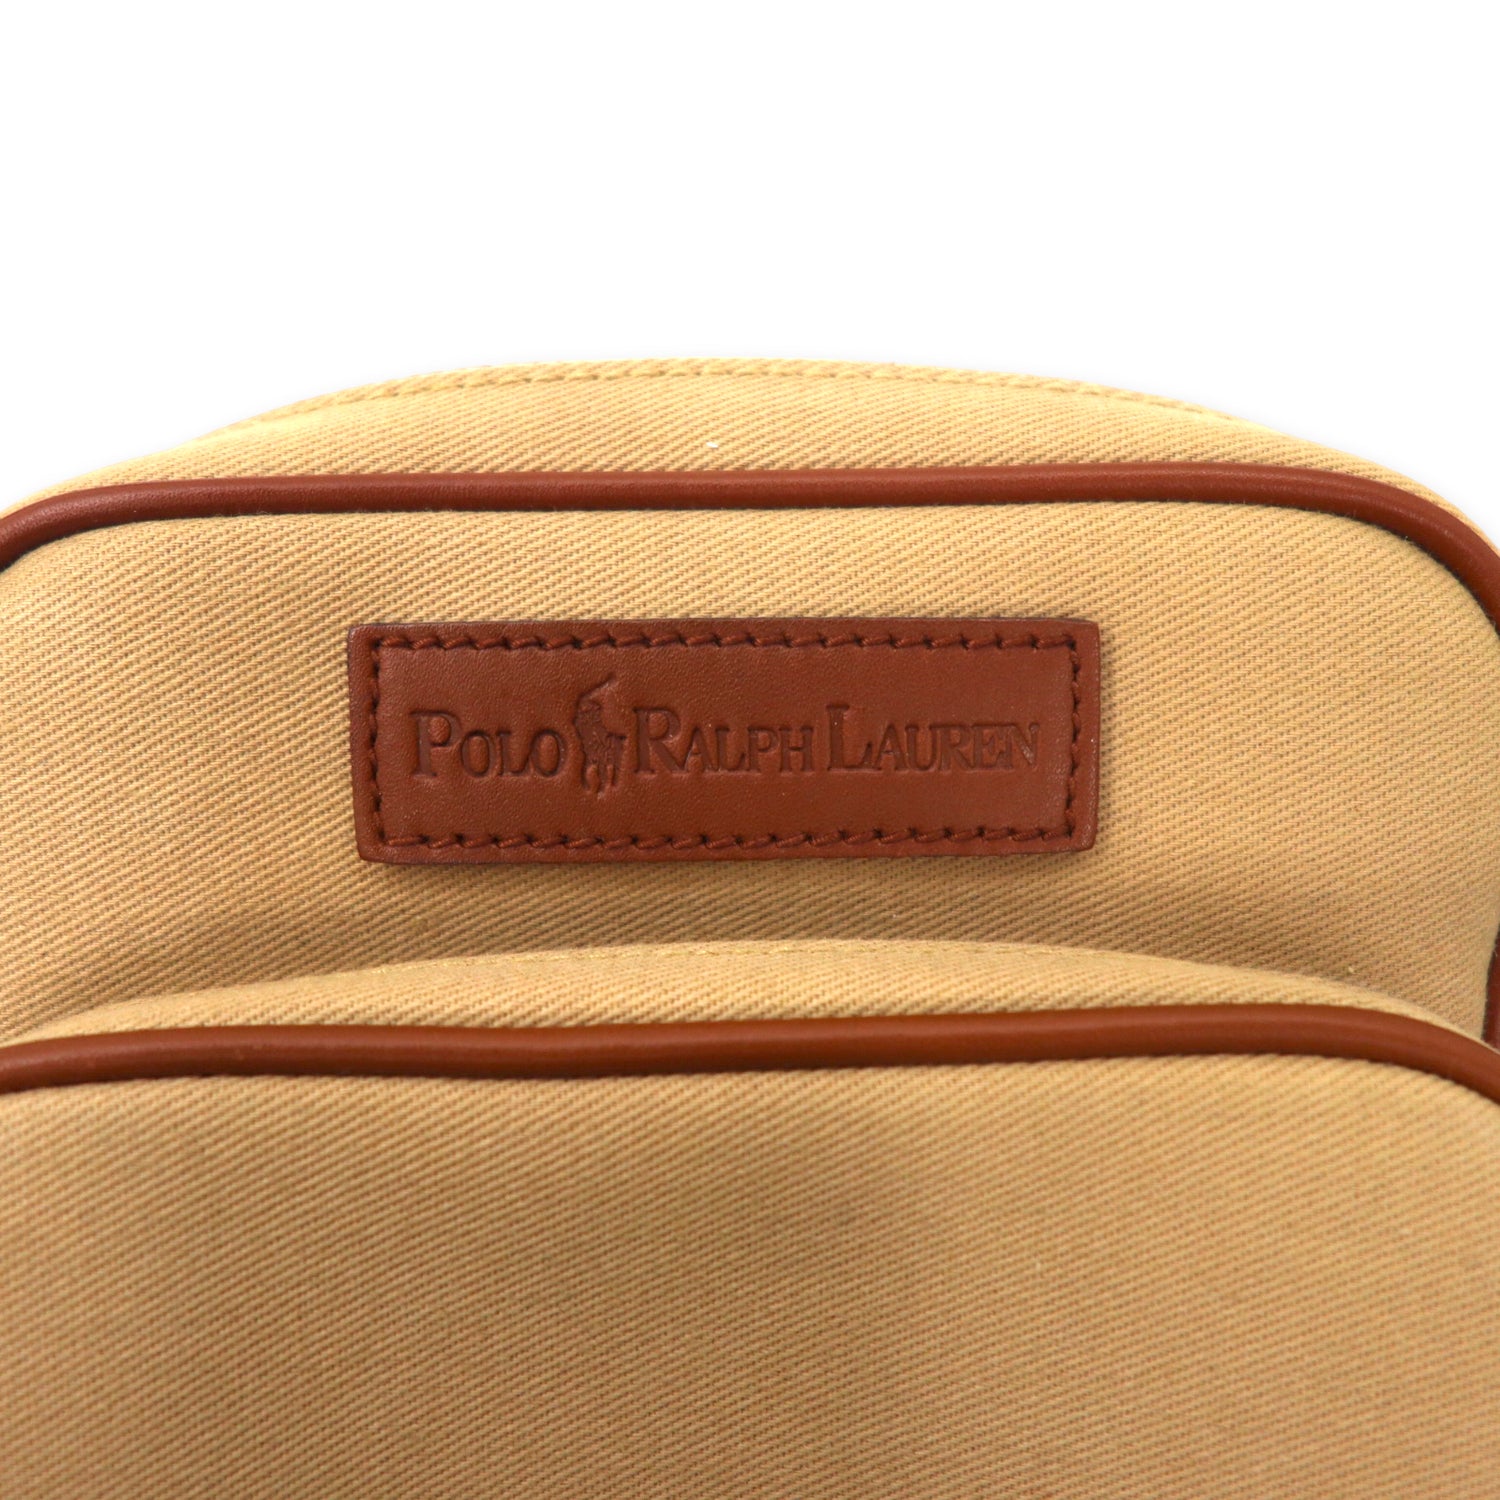 POLO RALPH LAUREN Shoulder Bag Pochette Beige Canvas Leather Switch Unused